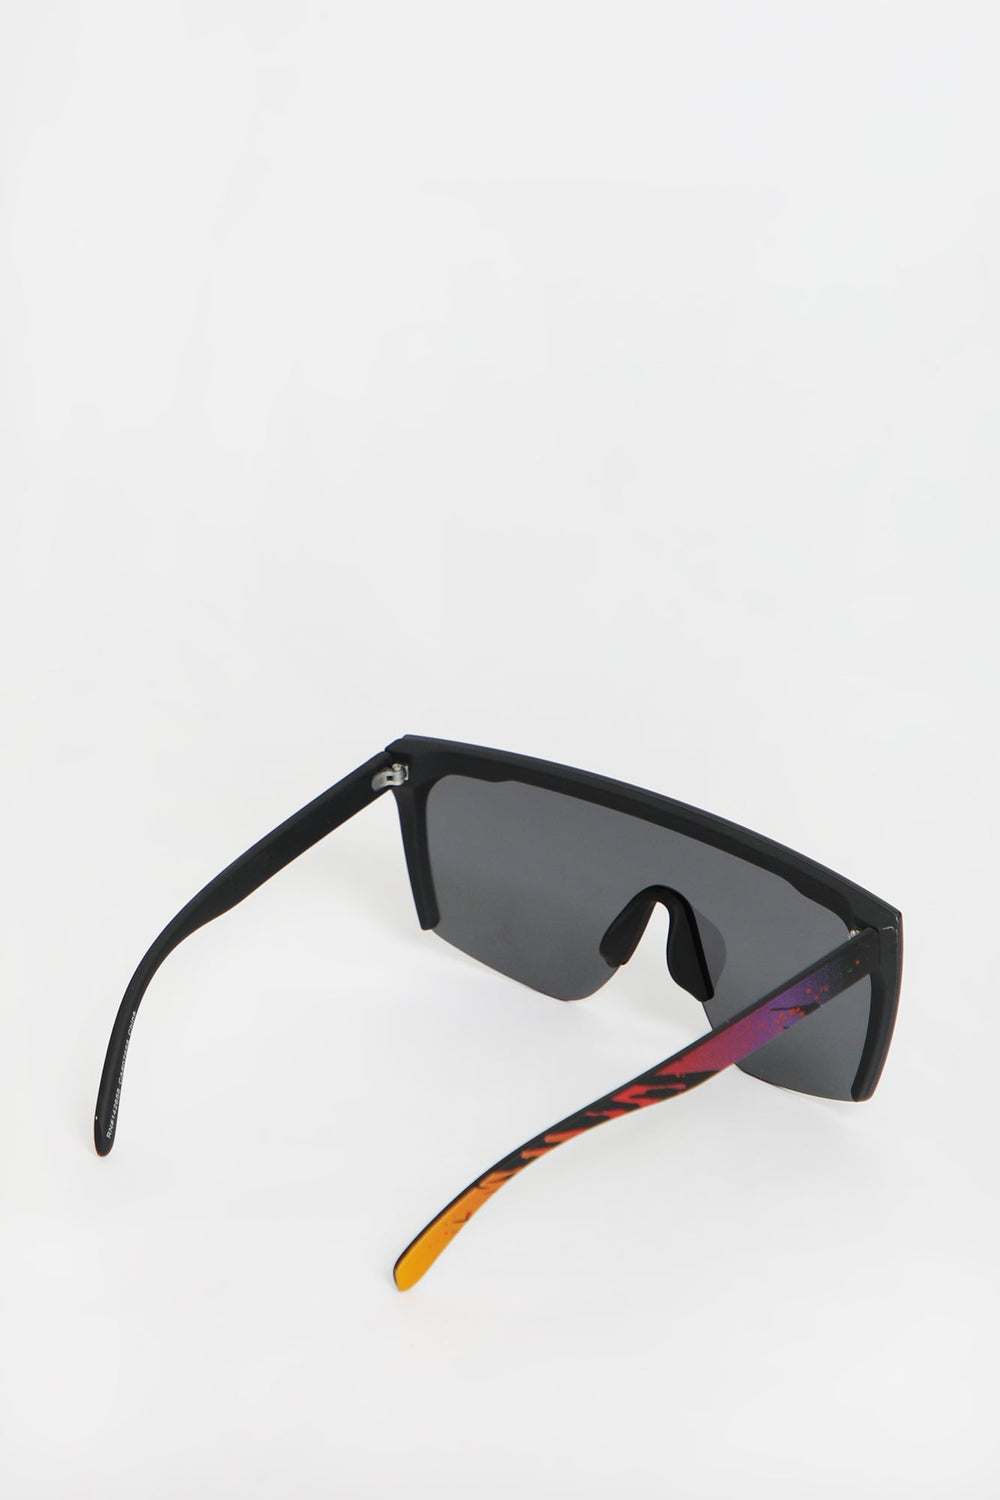 West49 Square Shield Sunglasses West49 Square Shield Sunglasses